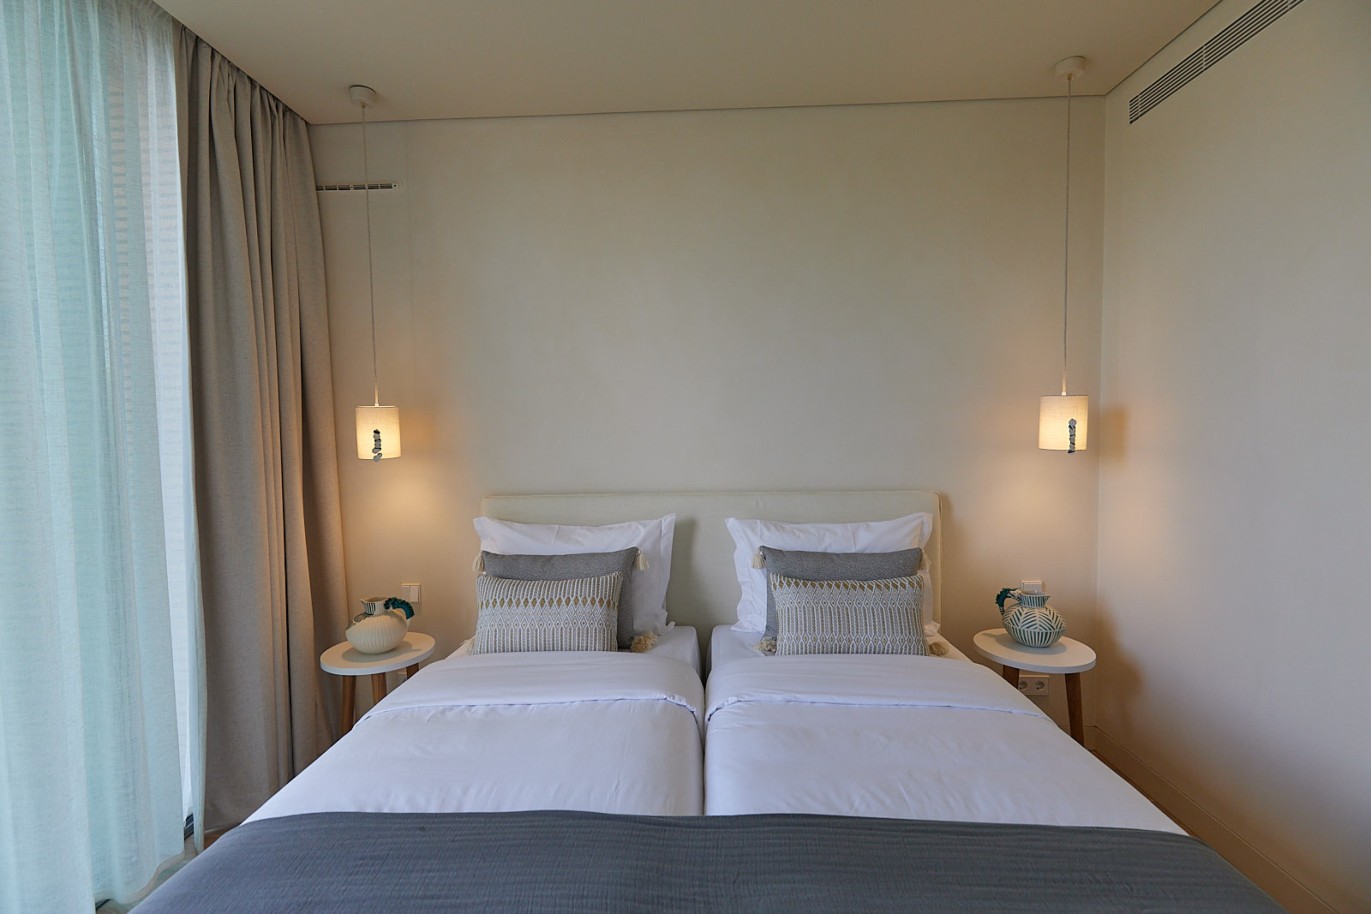 2 bedroom apartment in resort, for sale in Porches, Algarve_229231